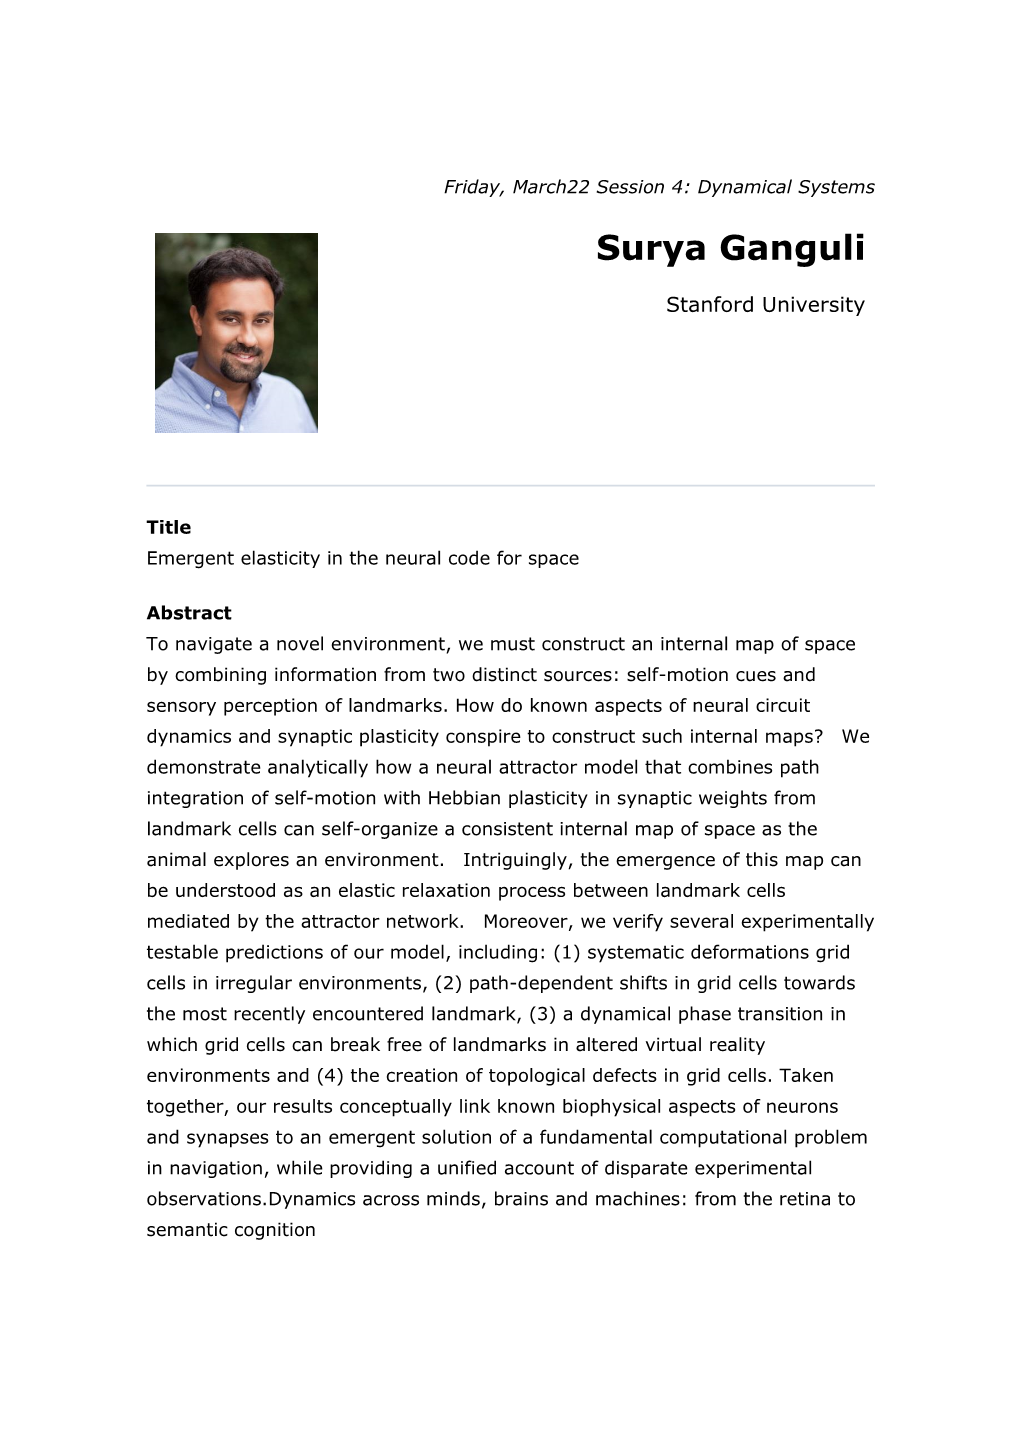 Surya Ganguli